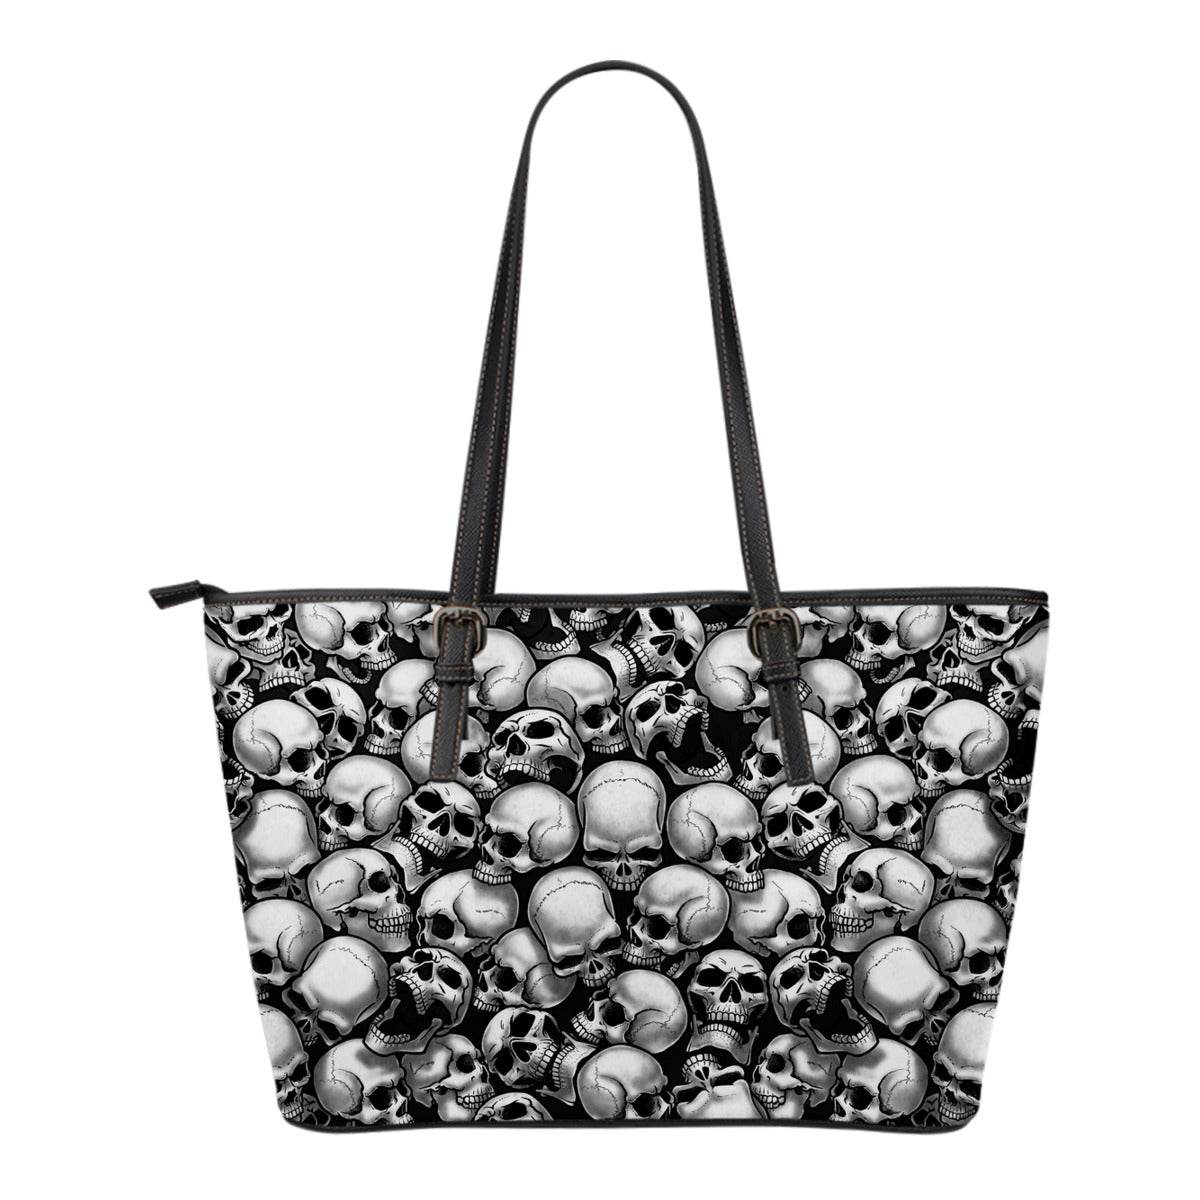 Skull Pile Small Leather Tote Bag - Black & White